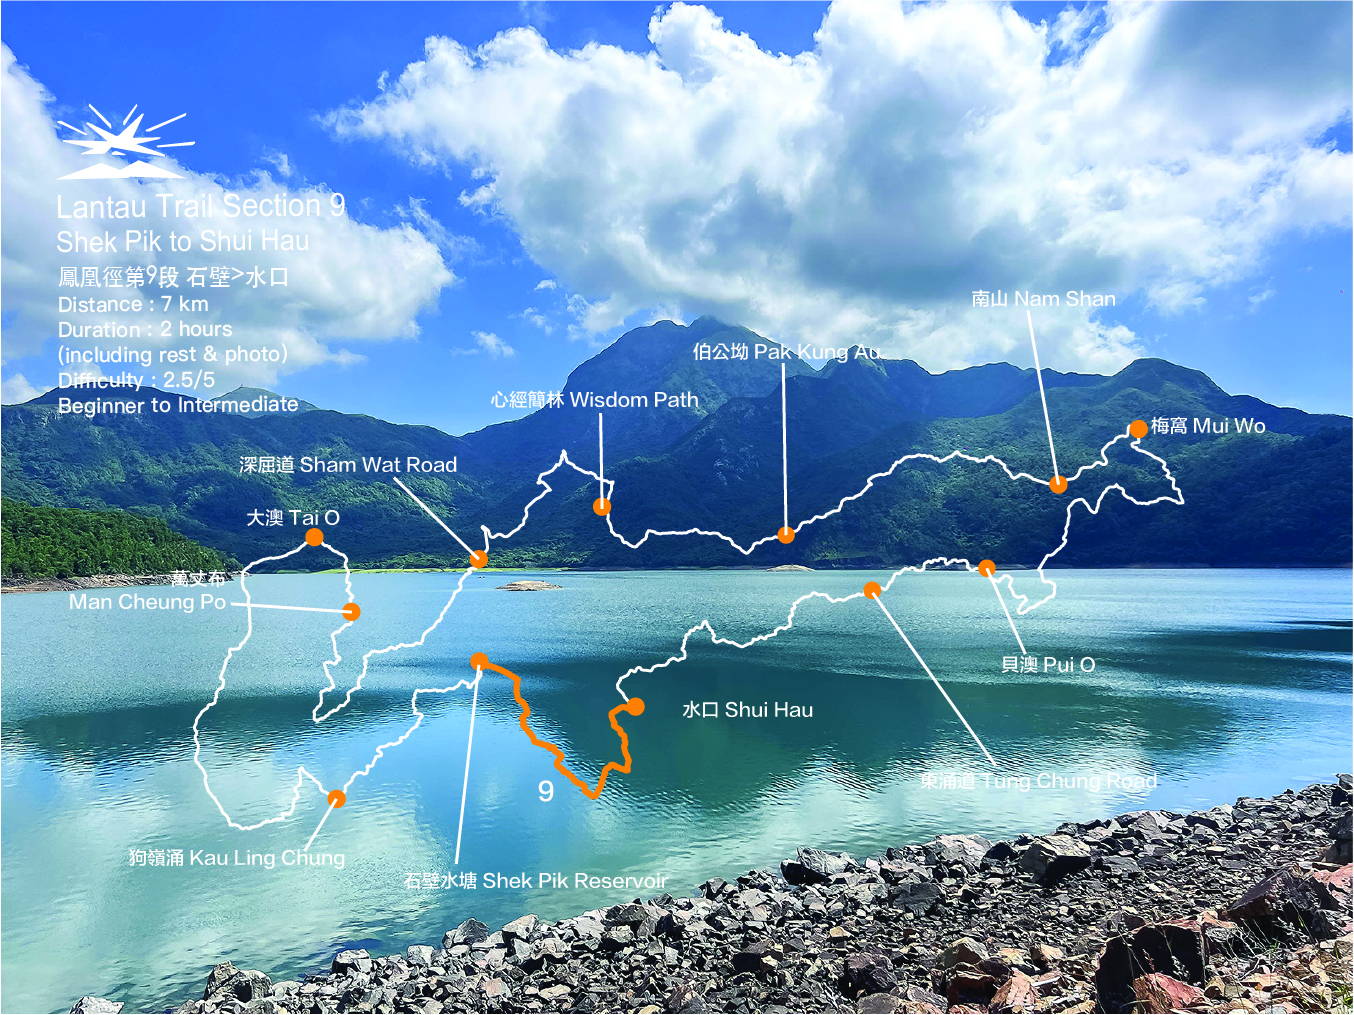 Lantau Trail Section 9 | Shek Pik to Shui Hau